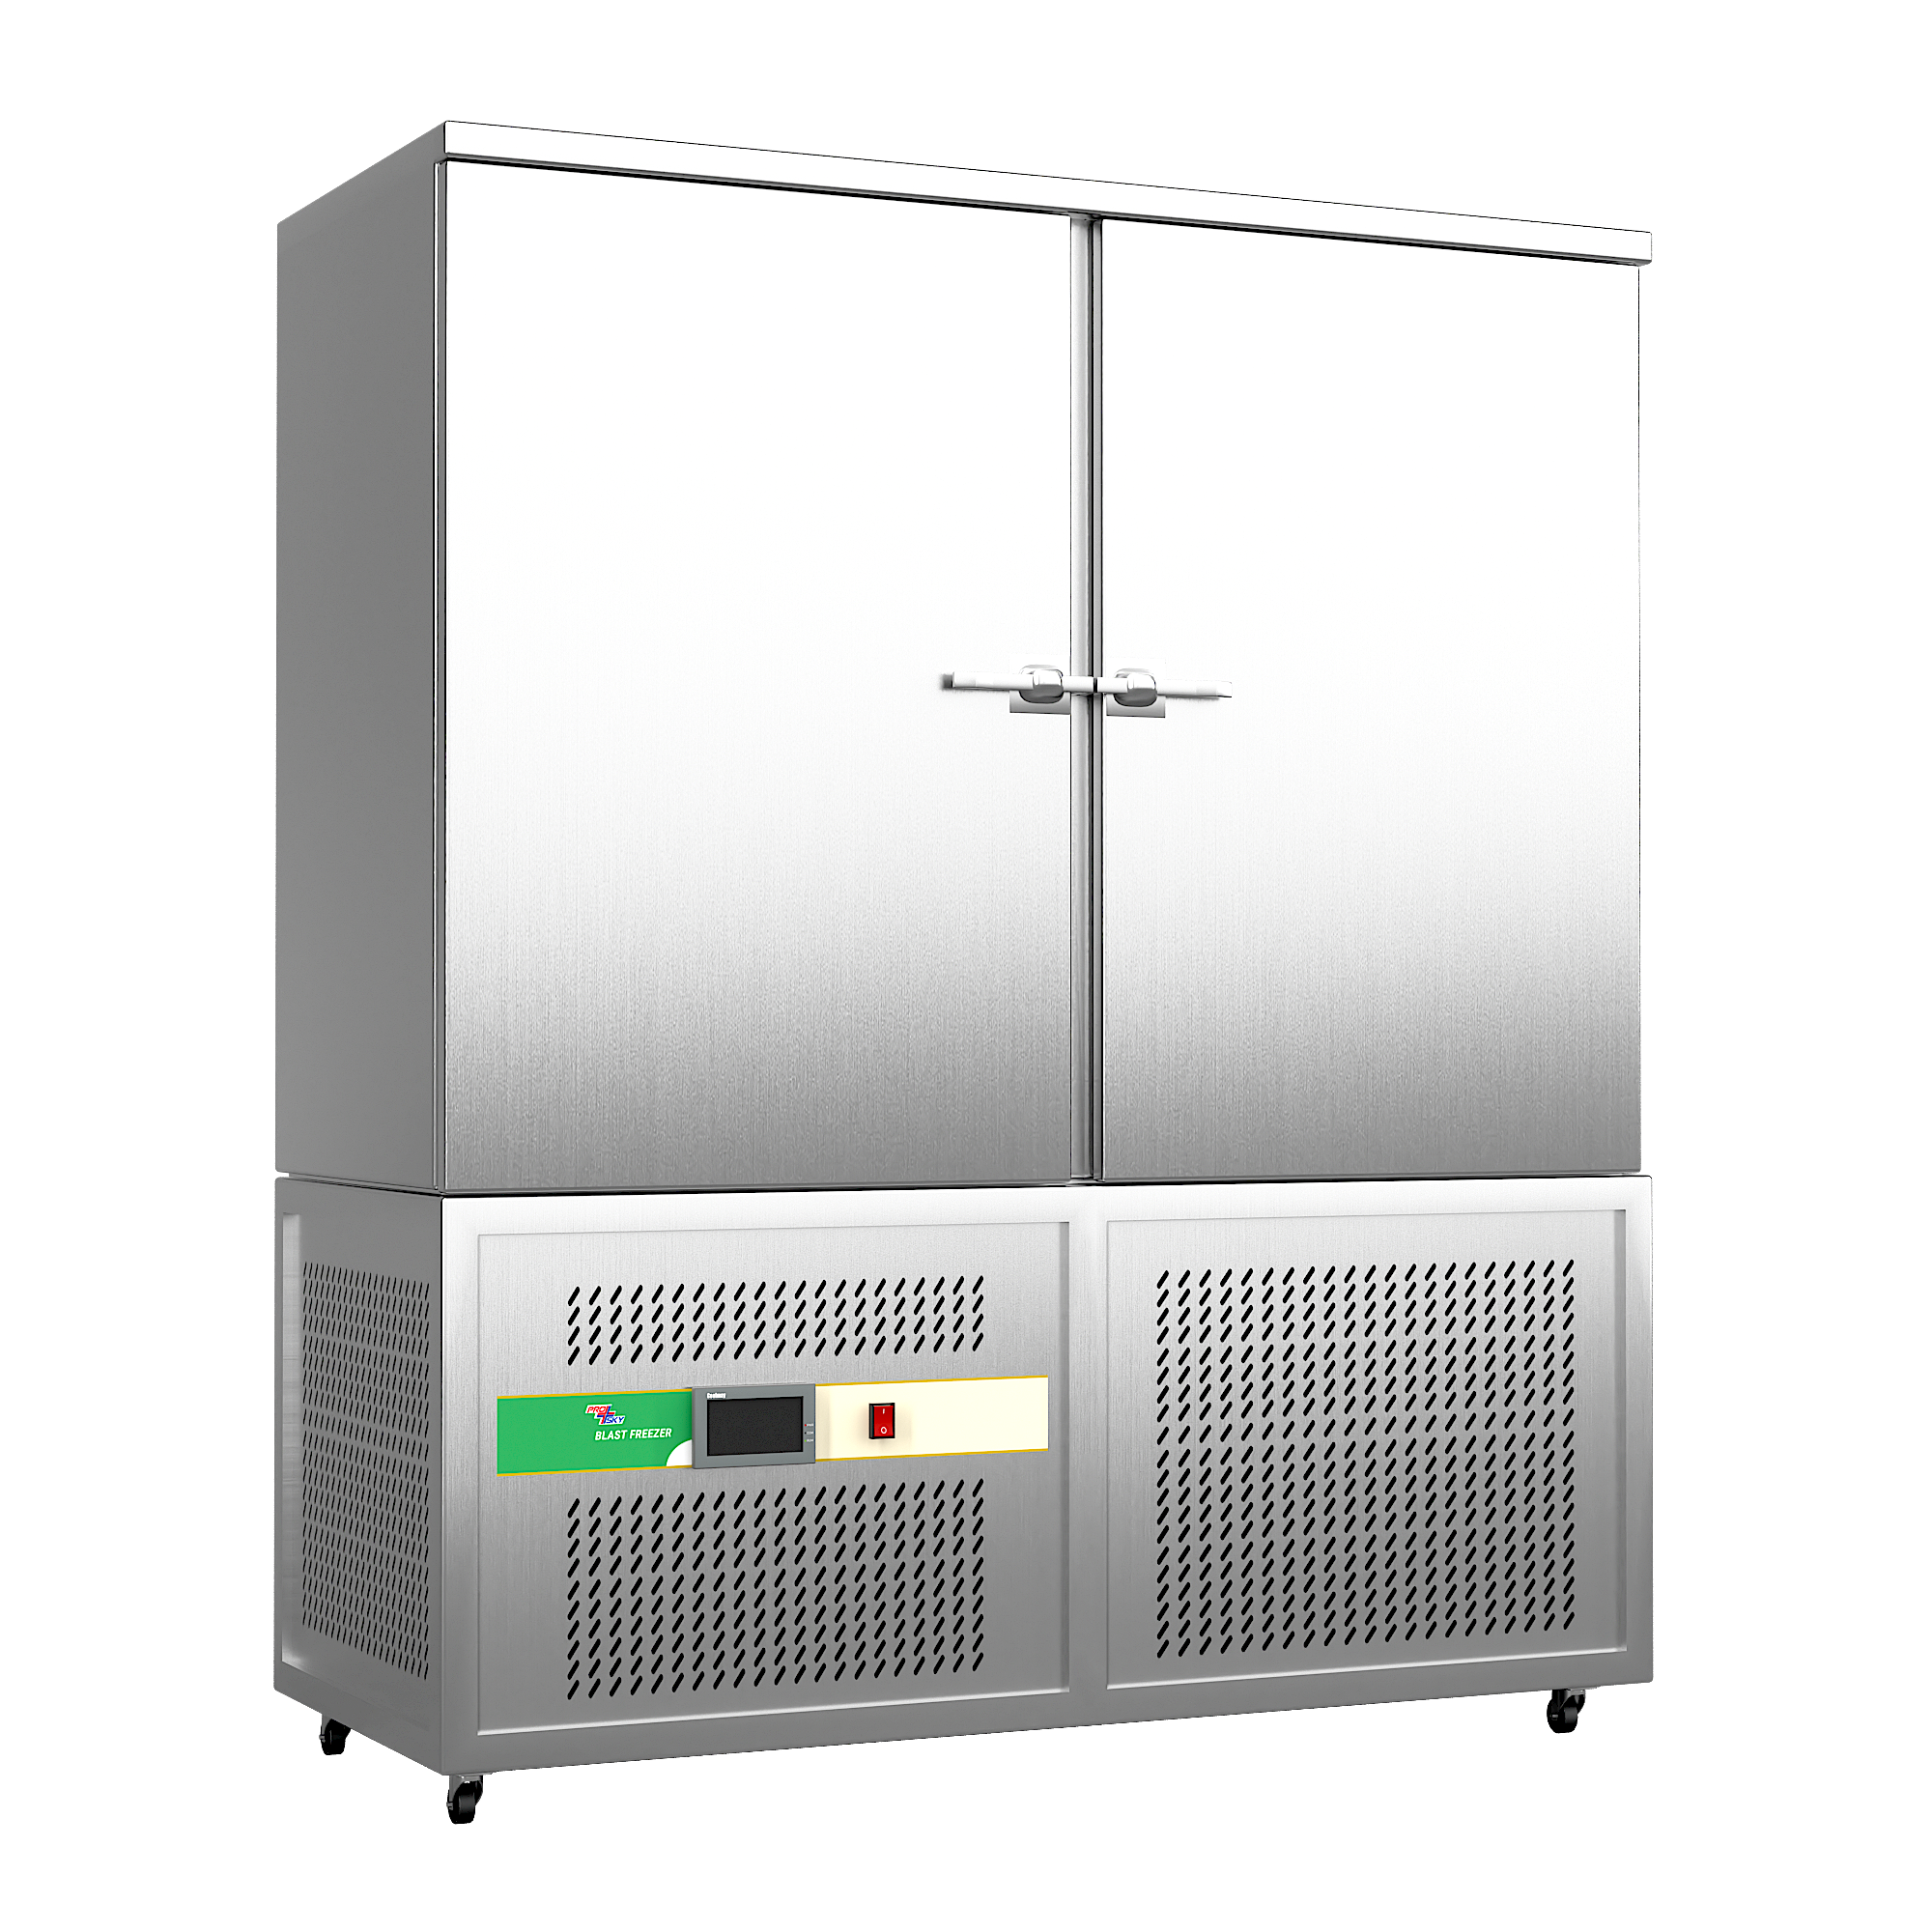 Prosky Saga 610L Precisión Industrial Food Blast Chiller Freezer con panel